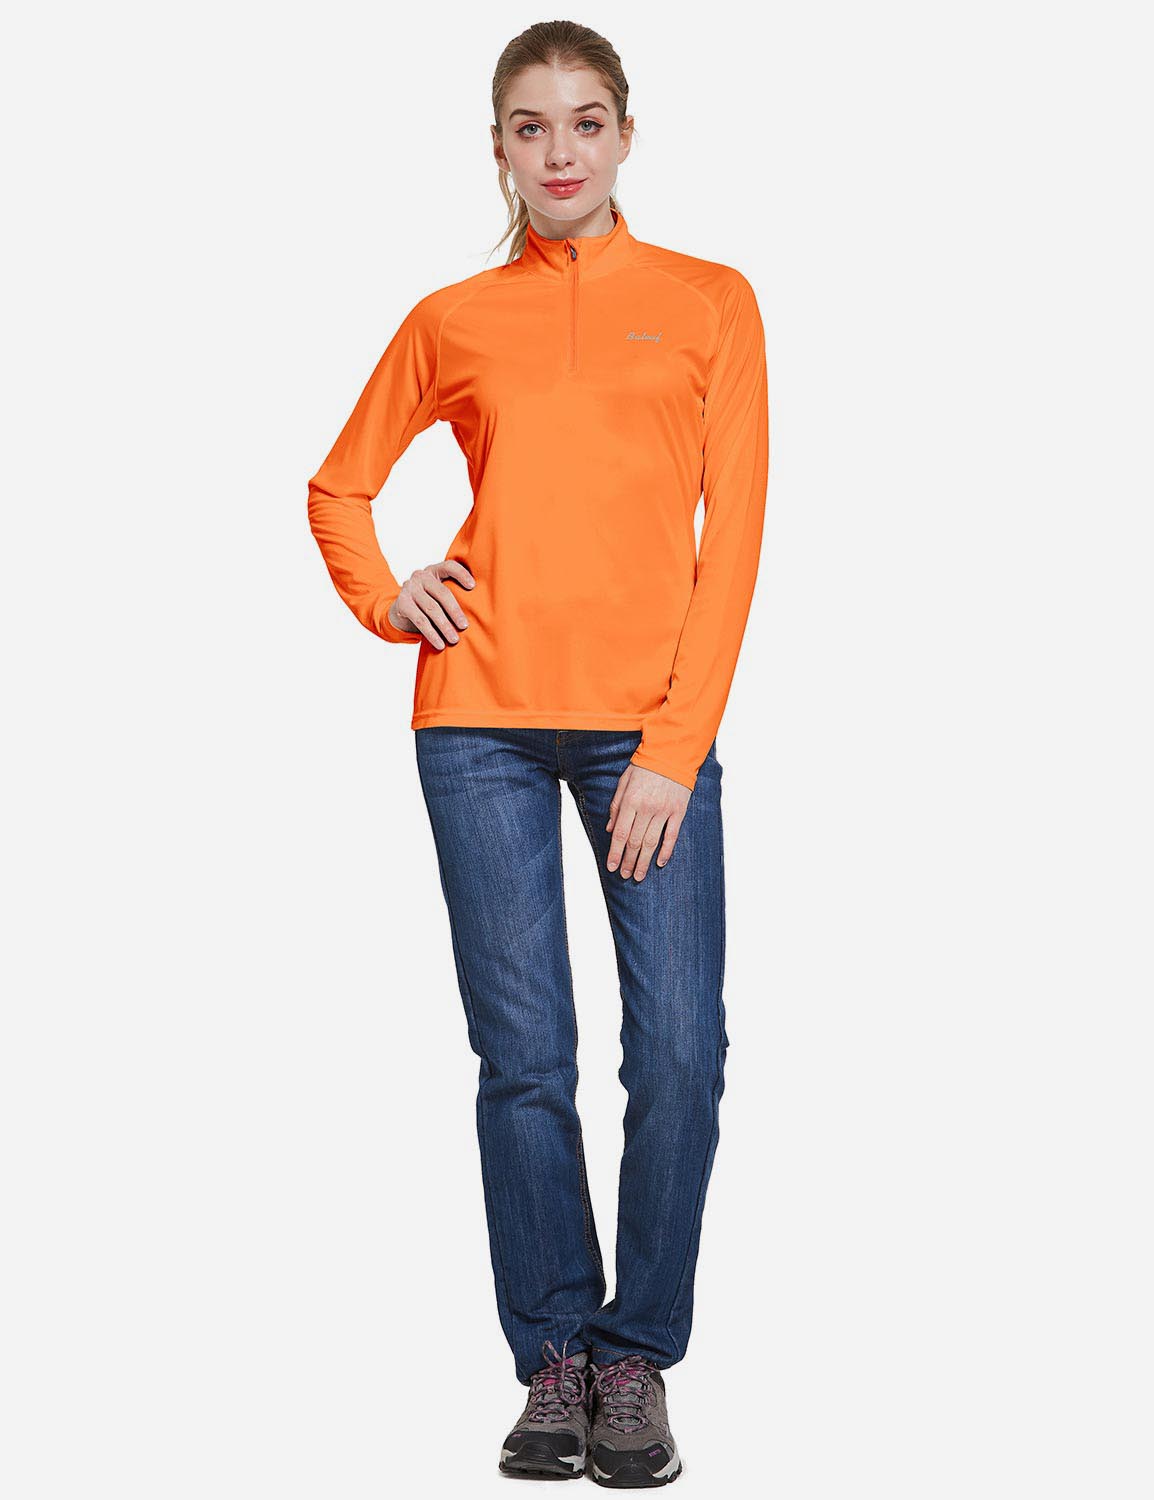 Baleaf Women's UP50+ Collared Long Sleeved Tshirt w Thumbholes aga065 Orange Full